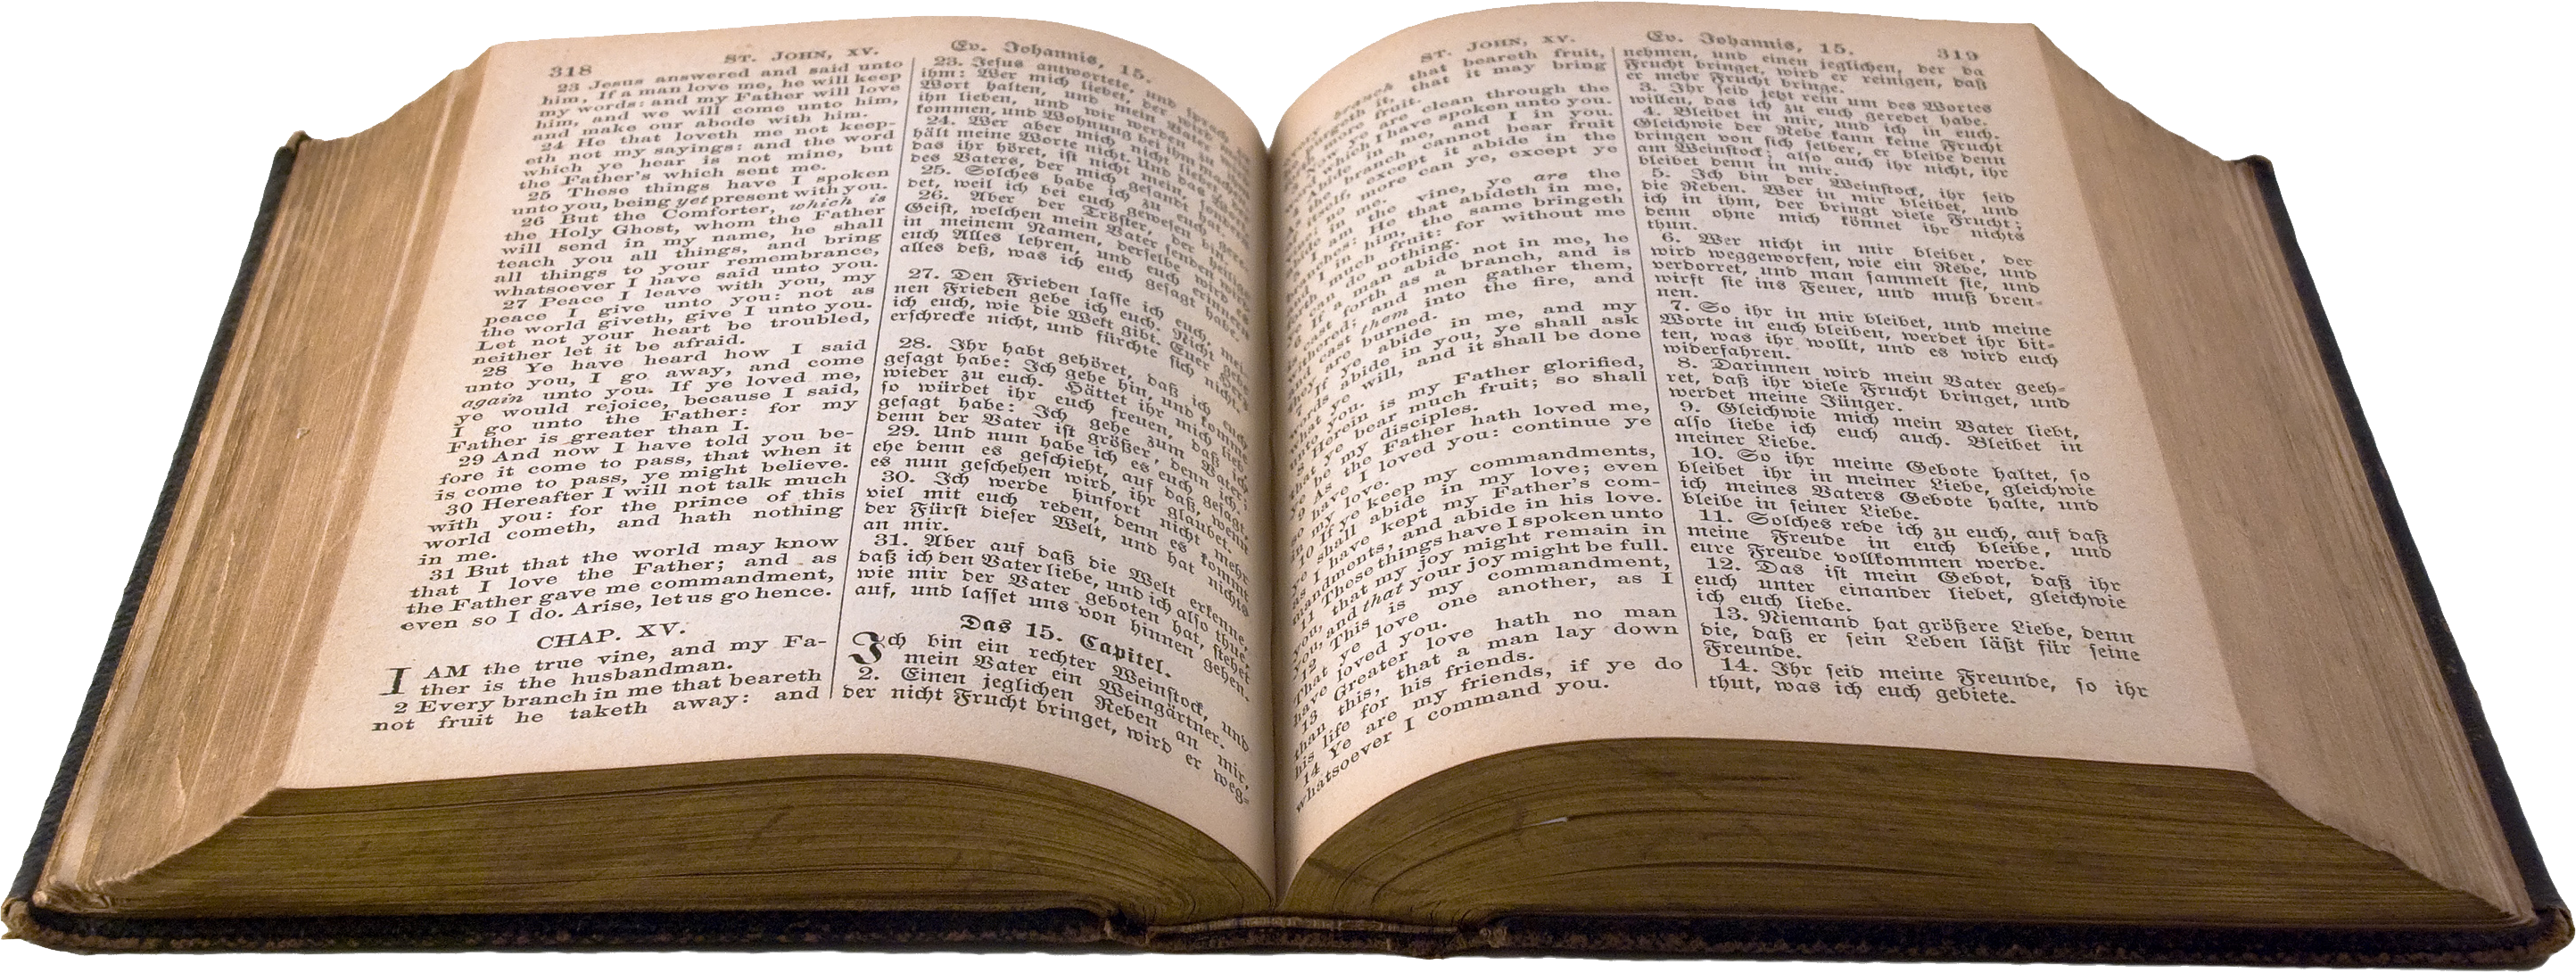 free-printable-image-of-open-bible-free-bible-images-printable